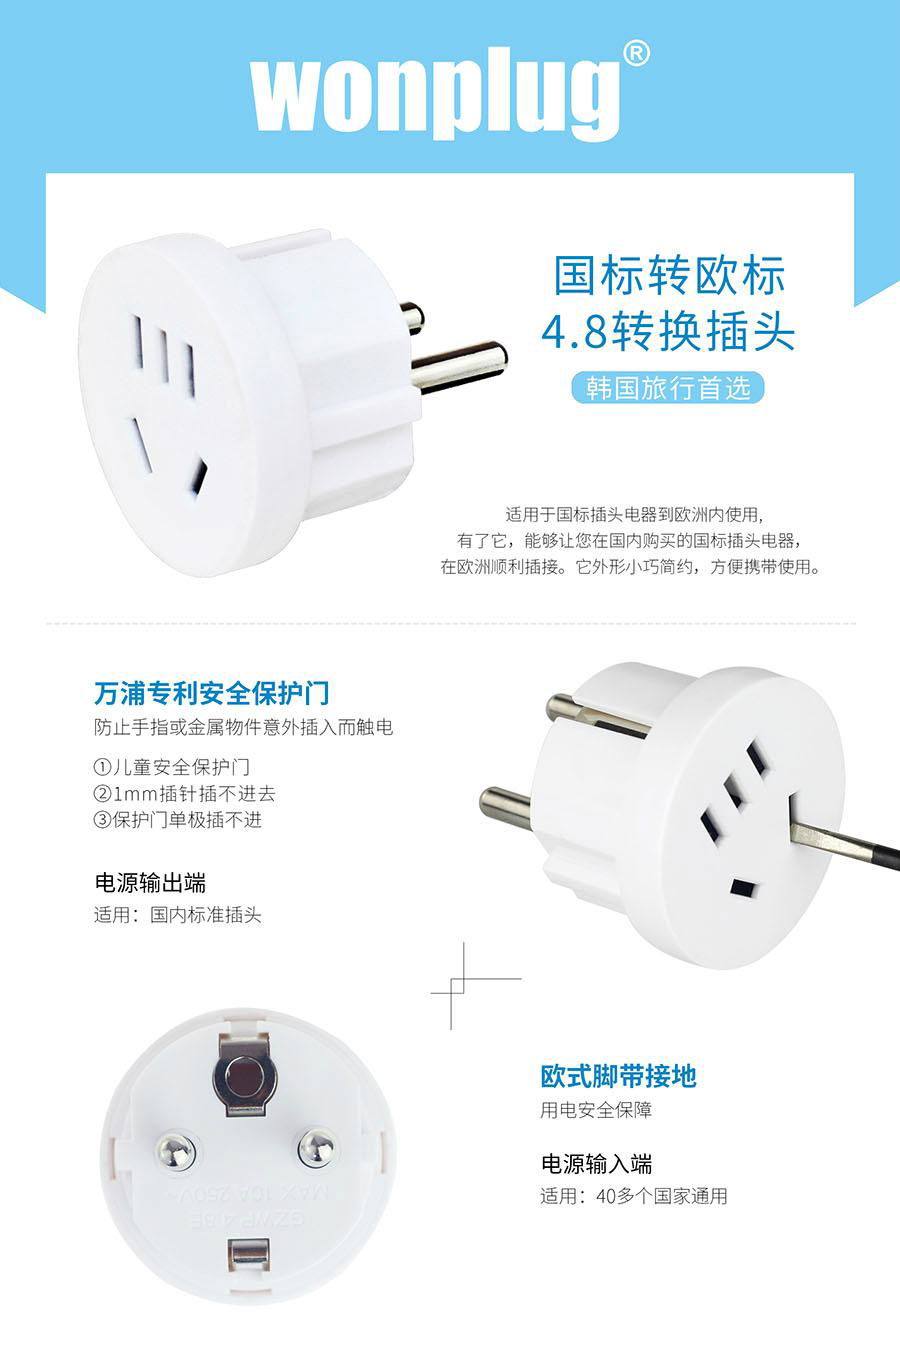 WP-4.8E China to Europe/Korea travel adapter plug  4